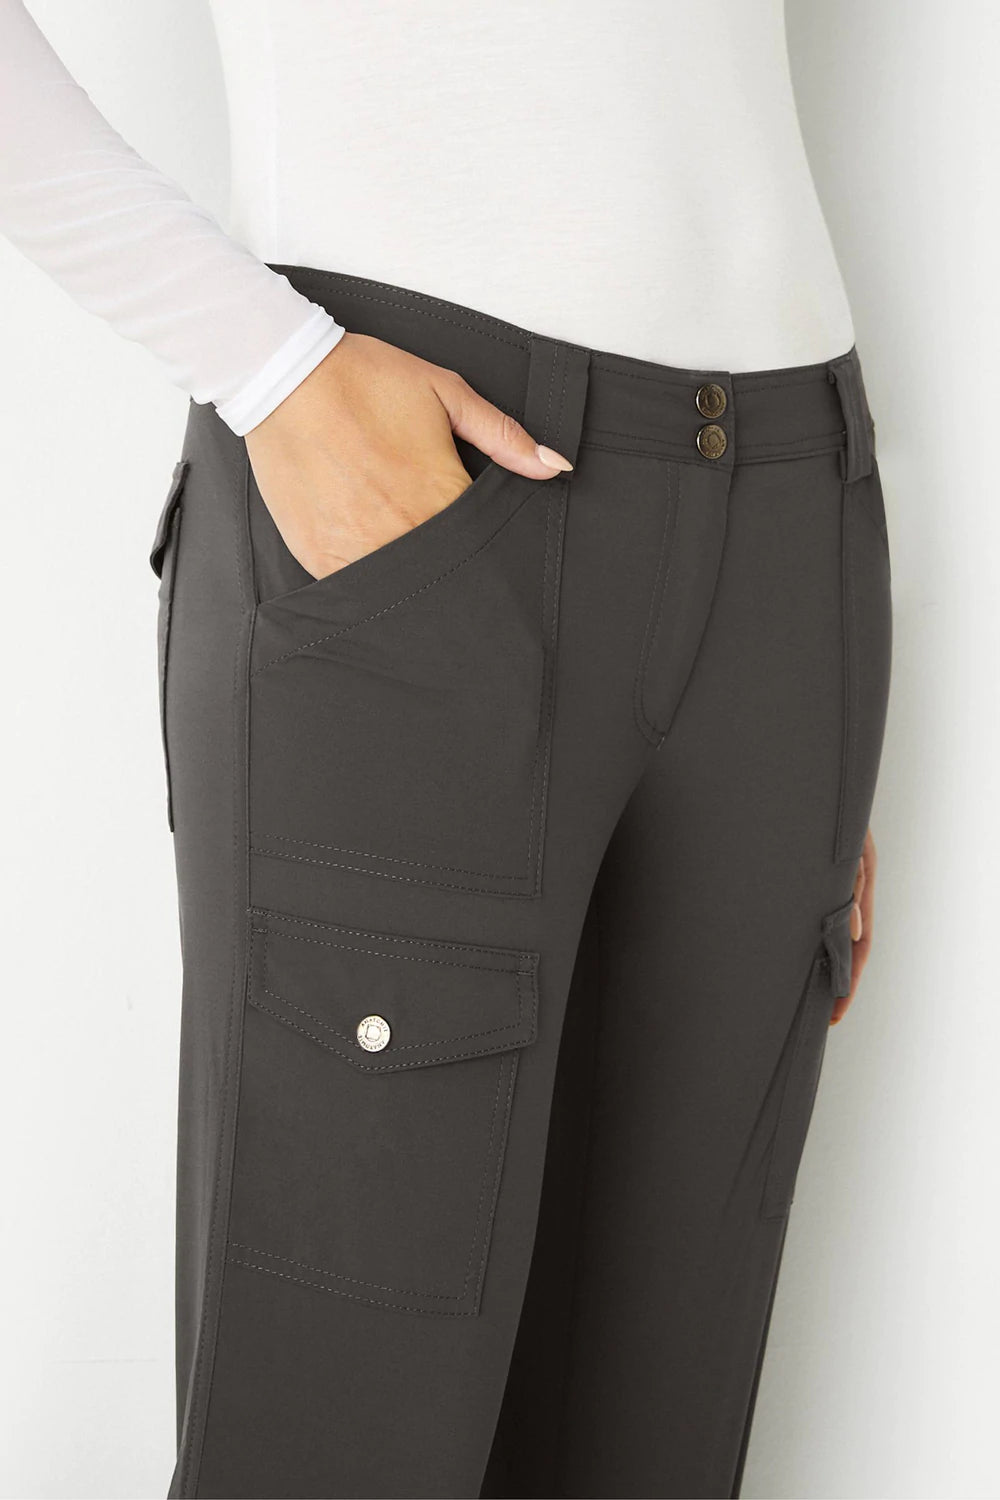 Anatomie Women's Kate Slim Cargo Pants